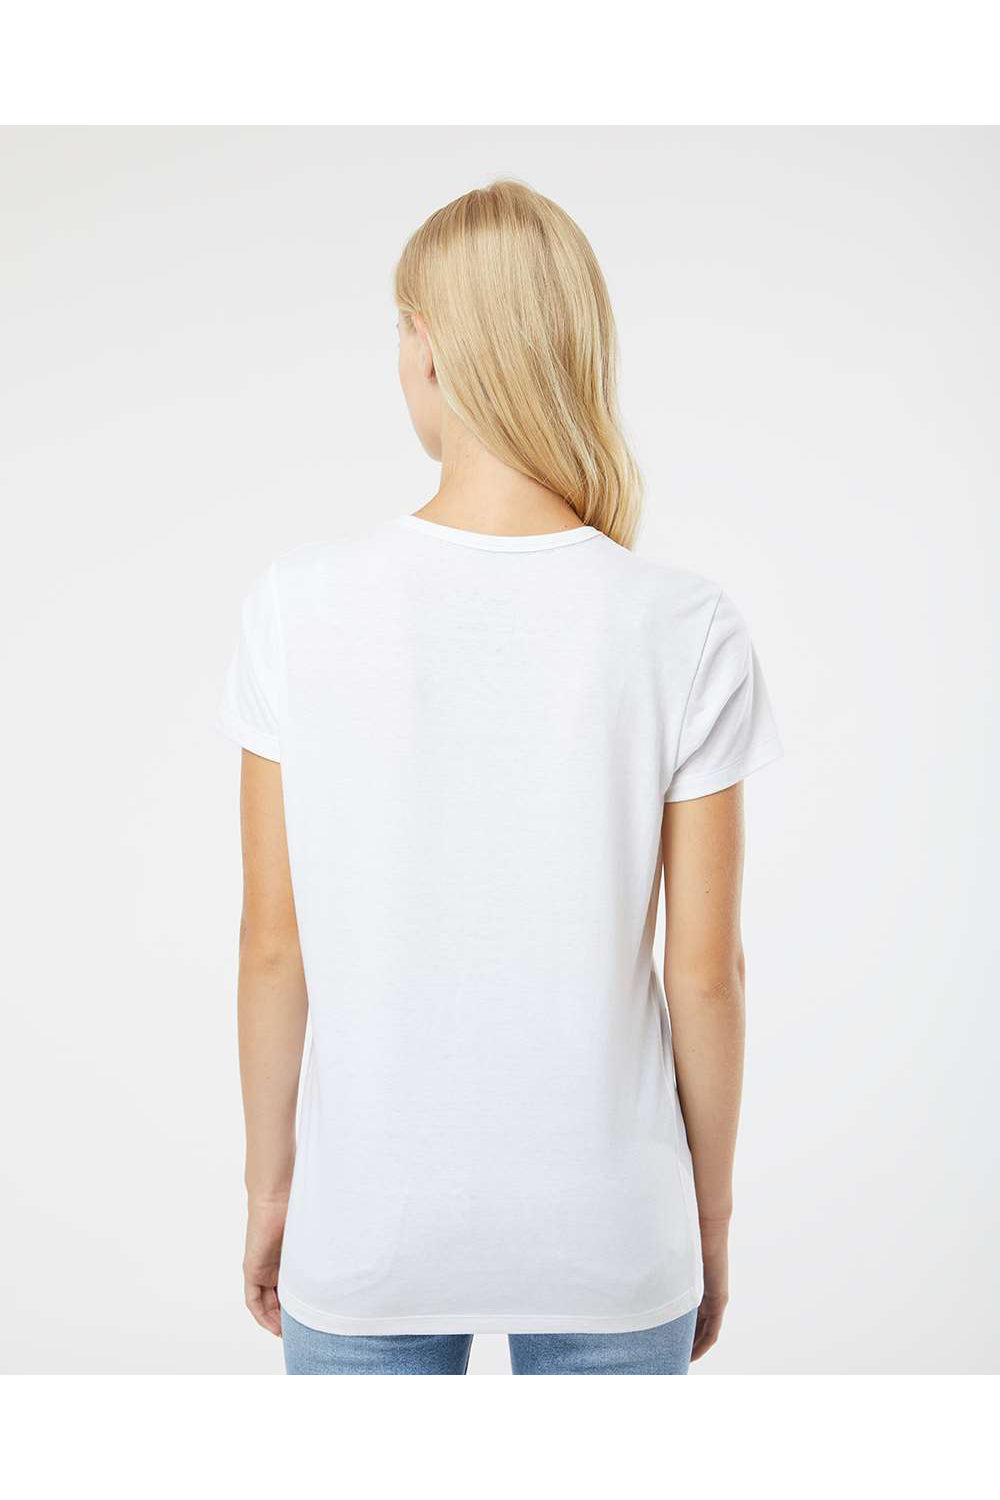 Kastlfel 2021 Womens RecycledSoft Short Sleeve Crewneck T-Shirt White Model Back